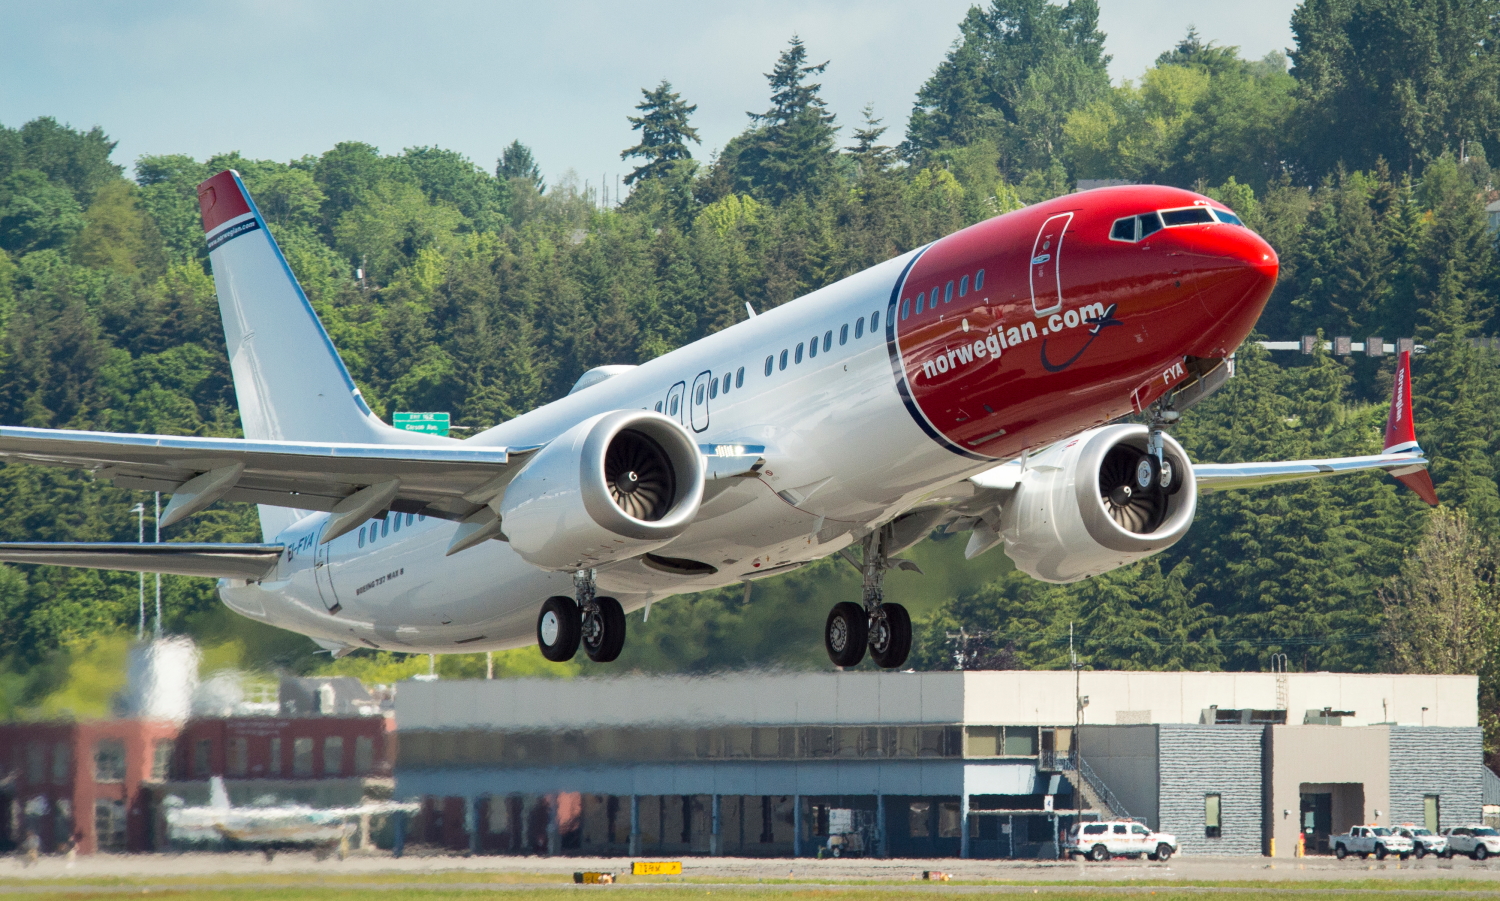 Norwegian Boeing 737 MAX 8